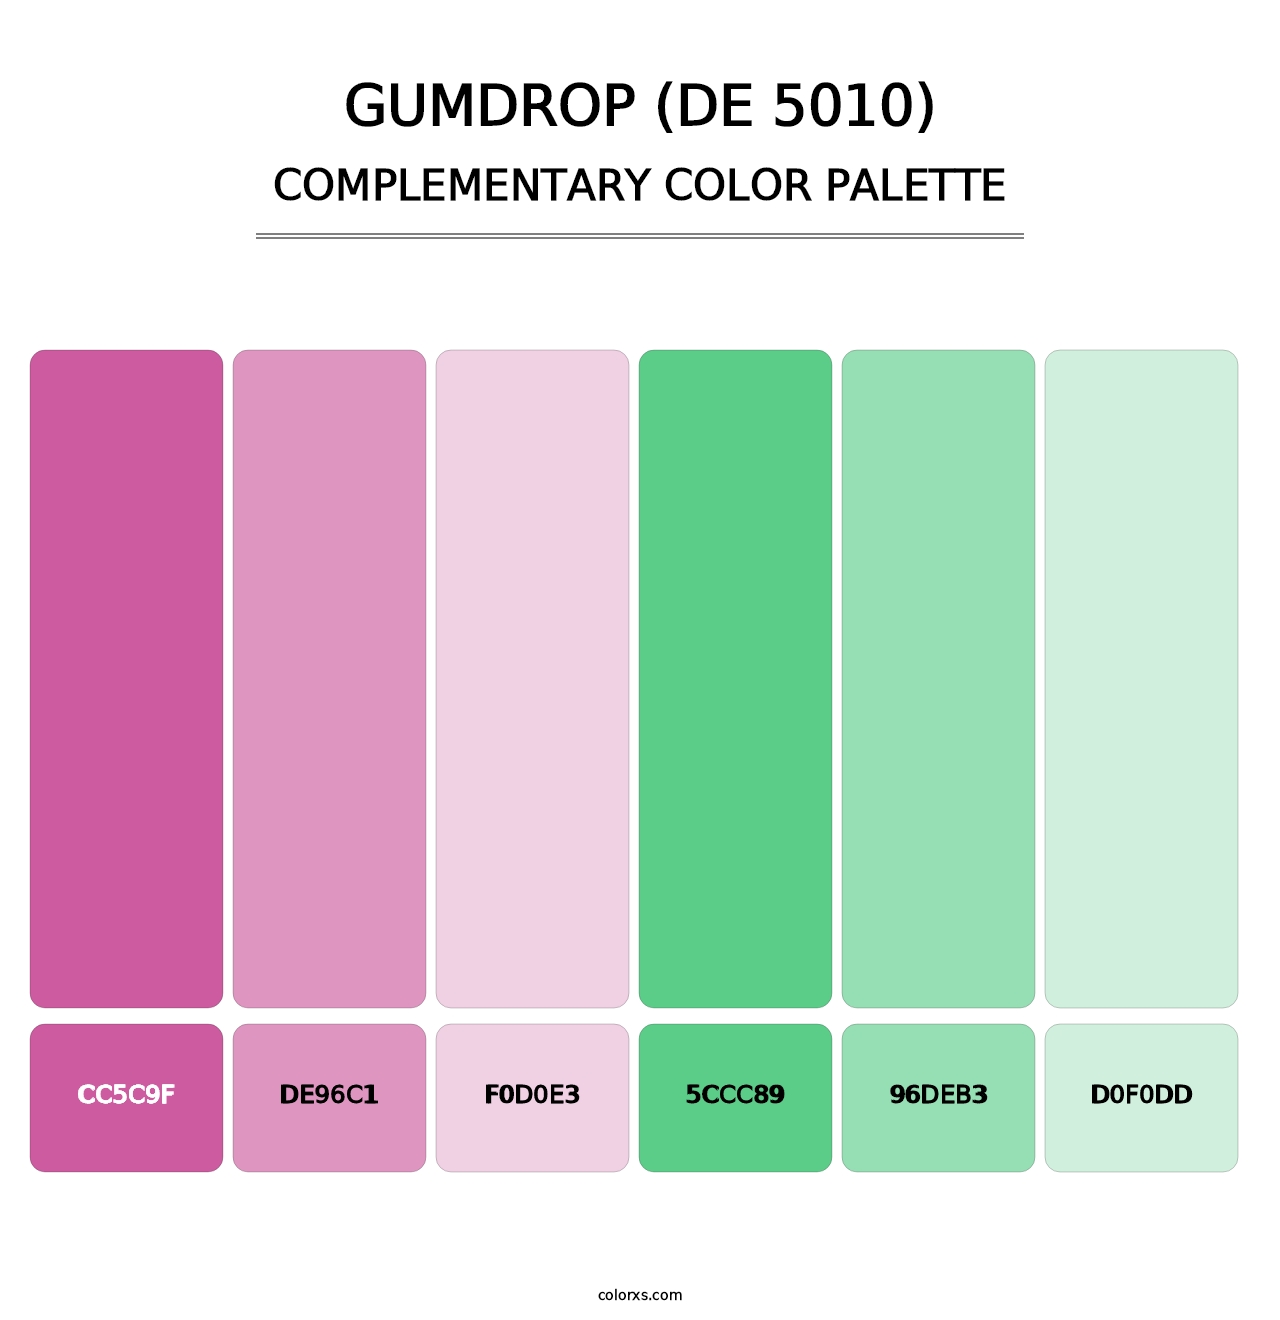 Gumdrop (DE 5010) - Complementary Color Palette